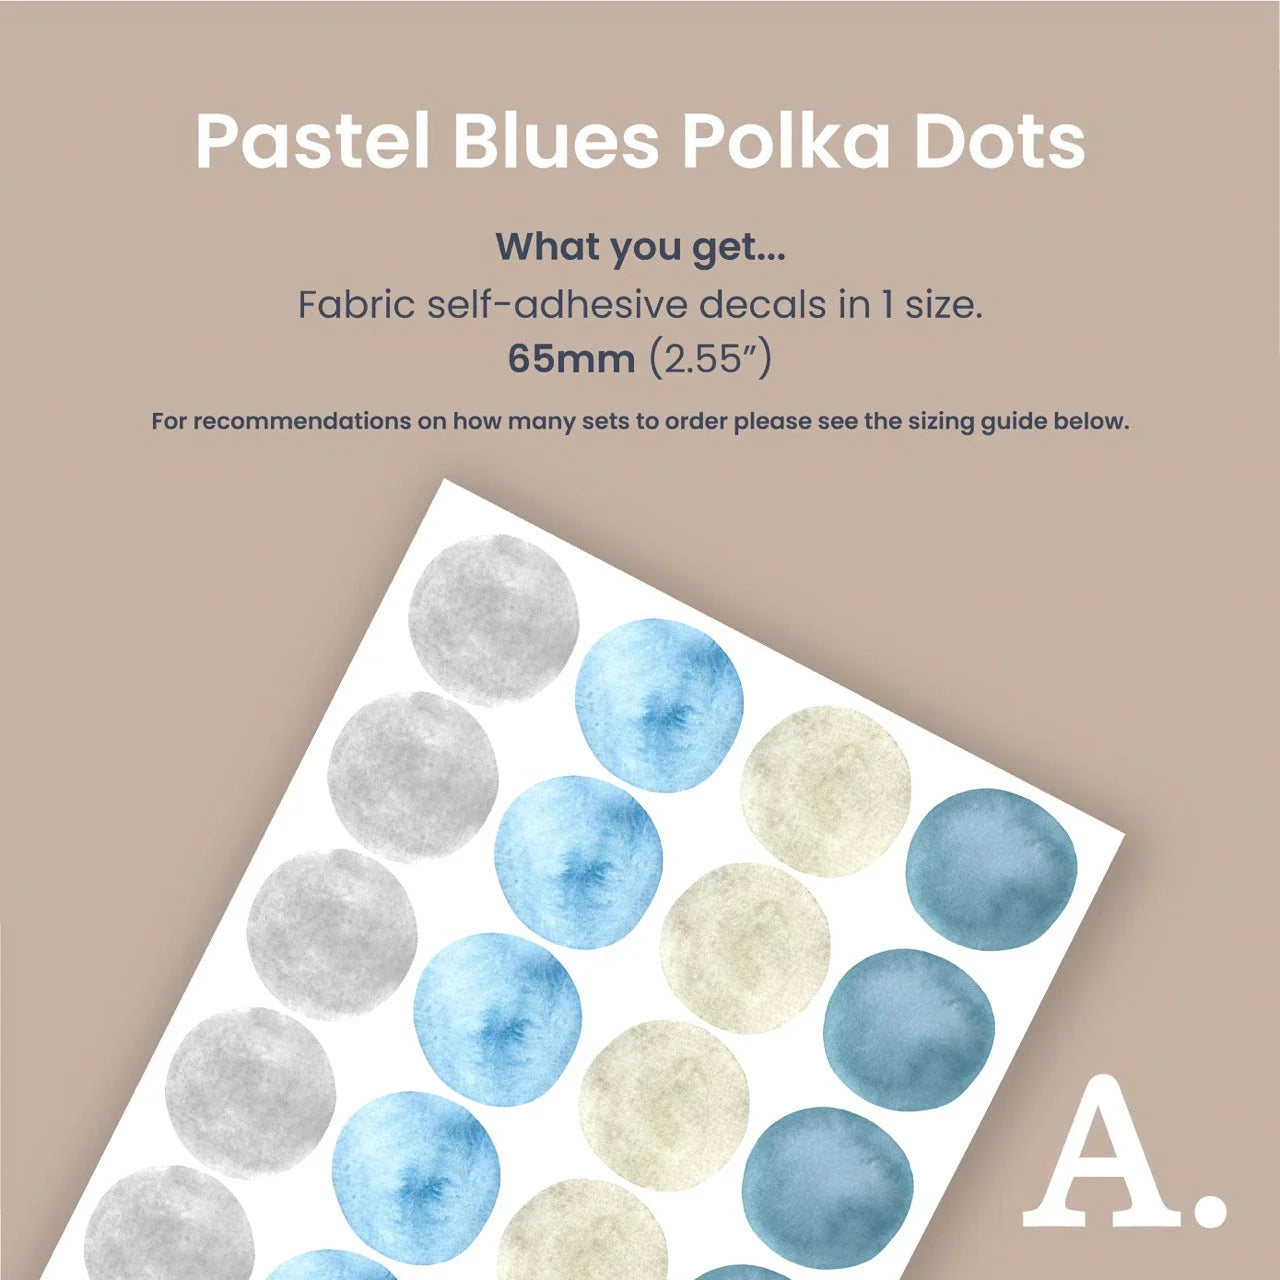 Pastel Blues Polka Dot Wall Decal - Decals Dots